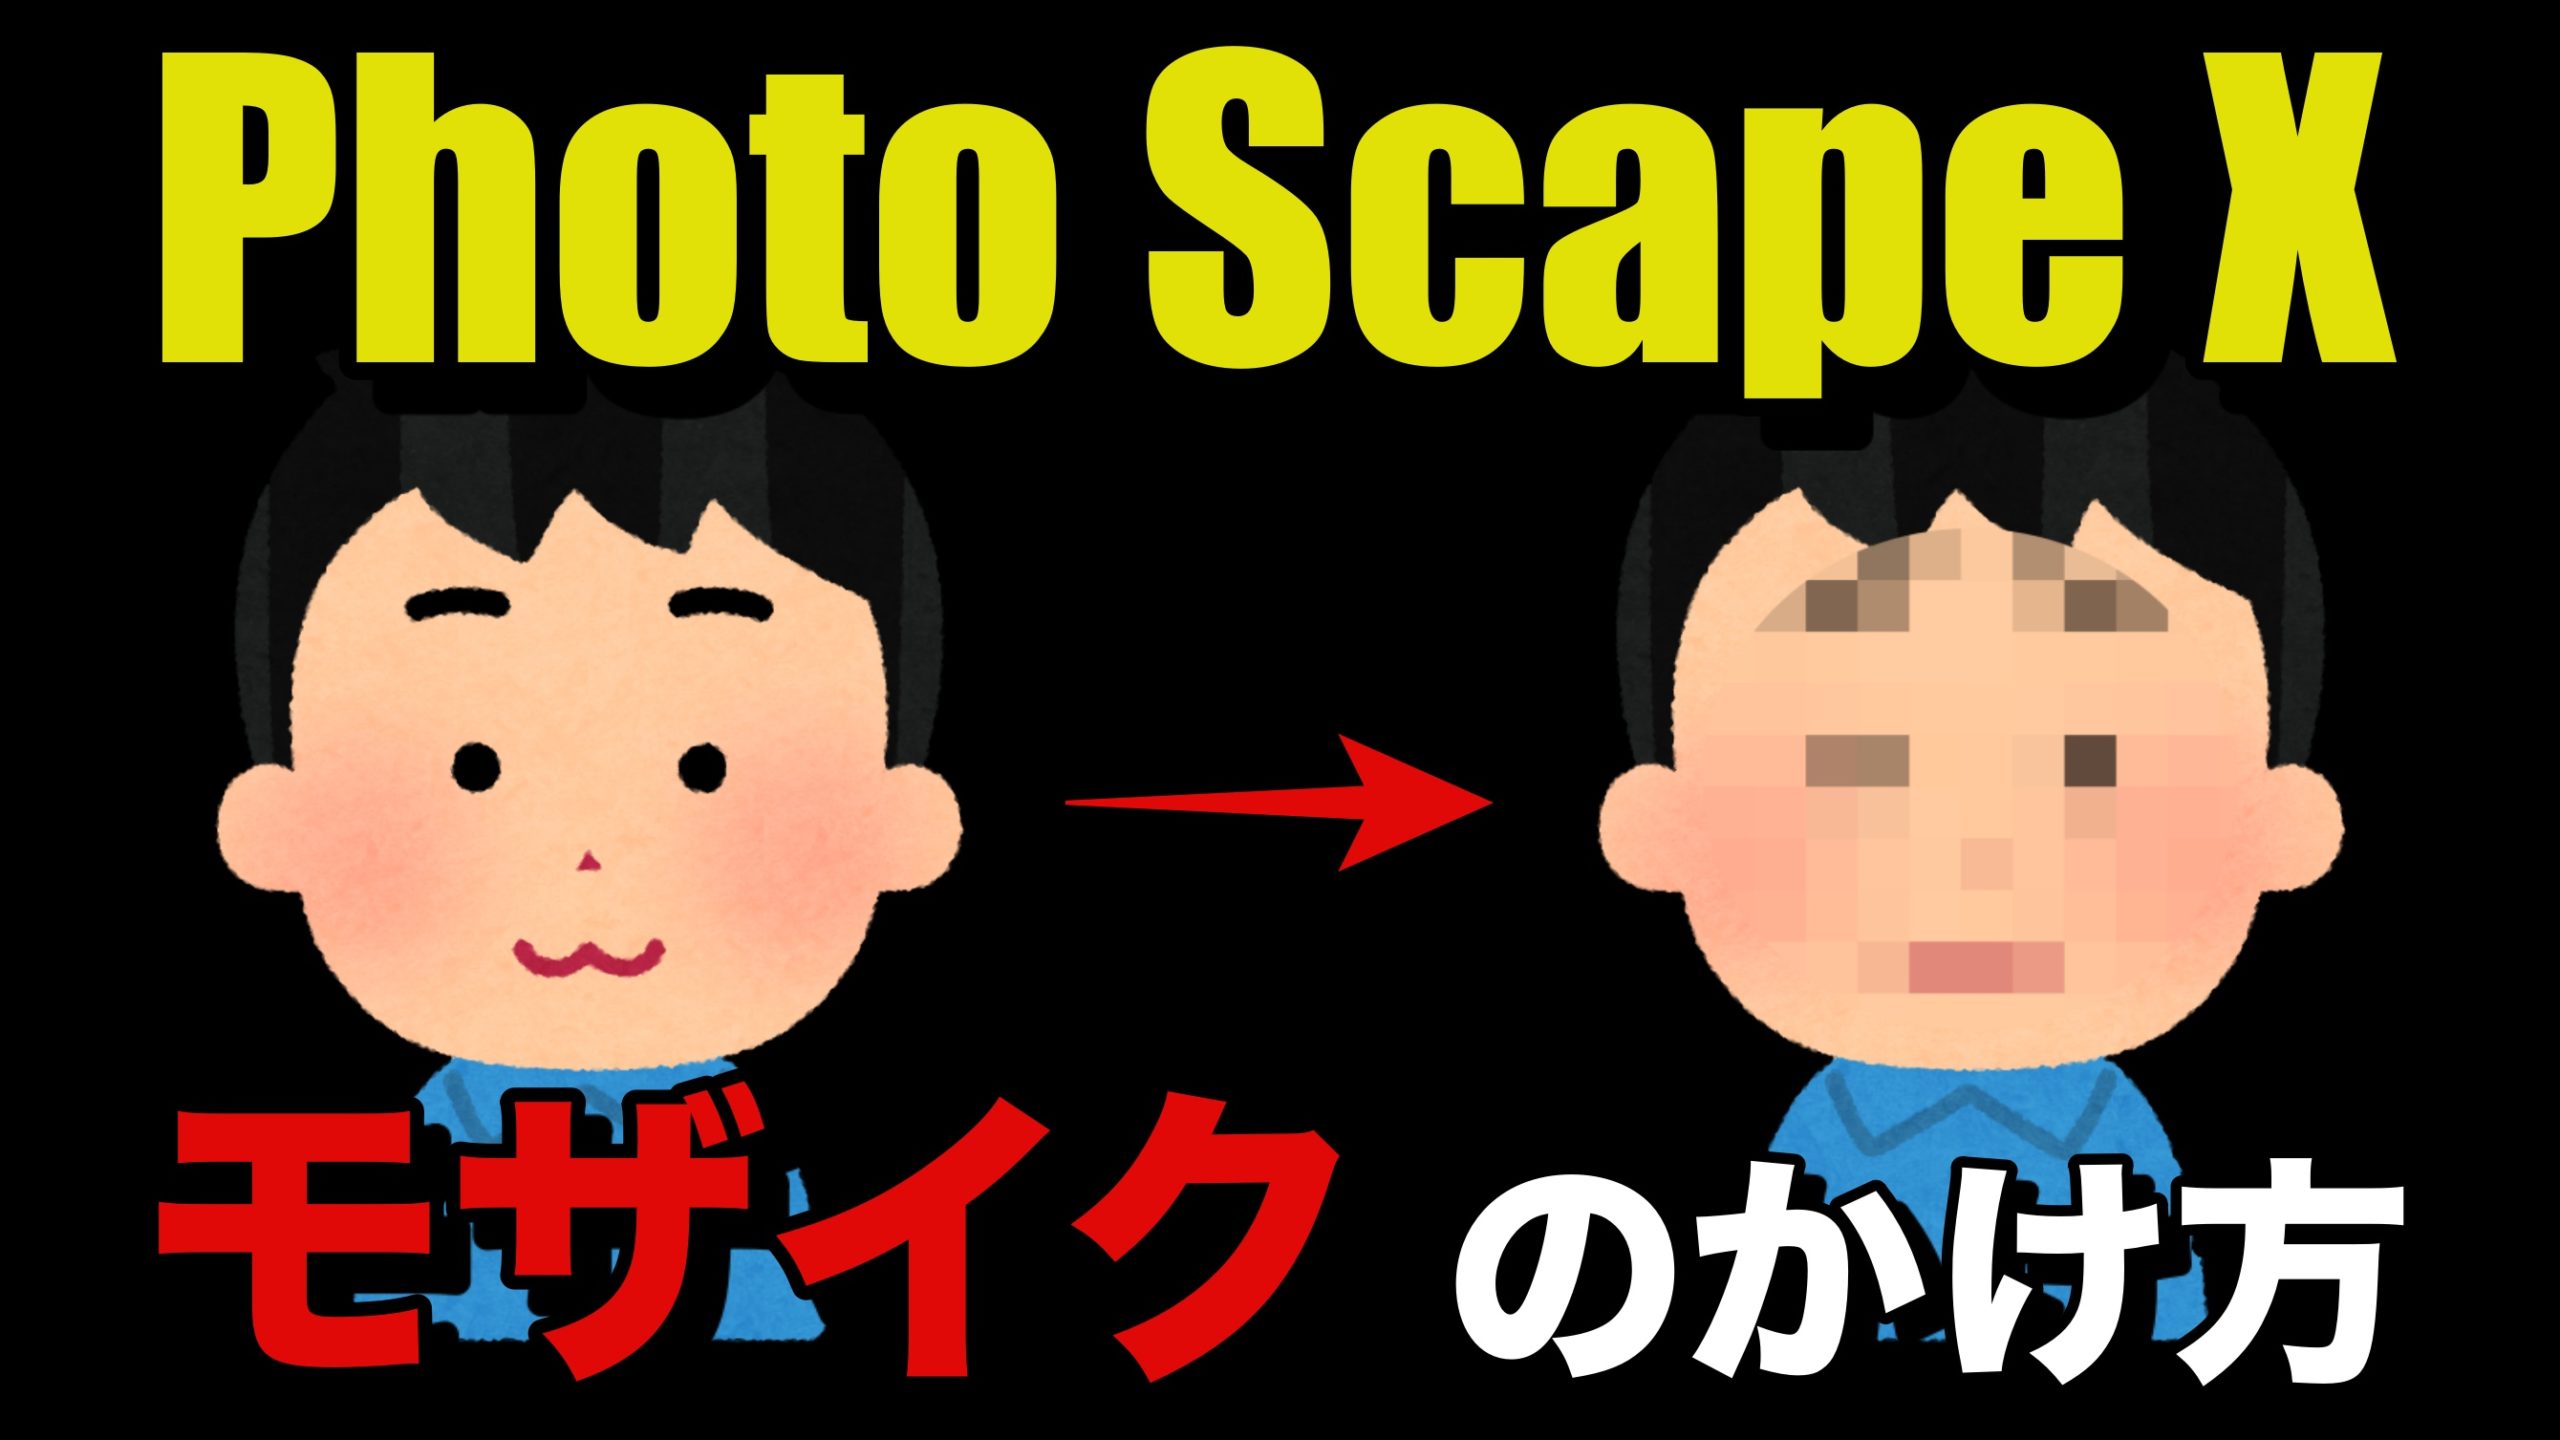 PhotoScape x モザイク やり方 方法